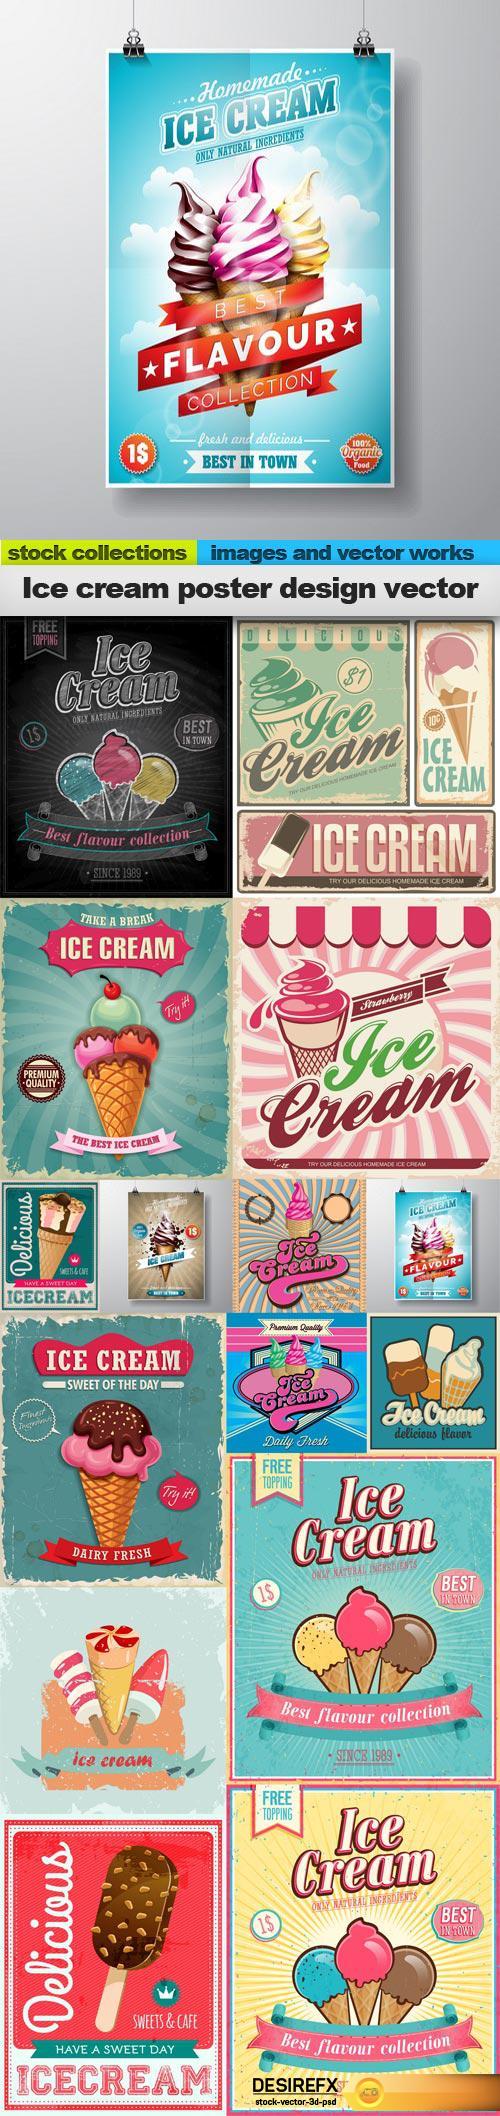 Ice cream poster design vector, 15 x EPS